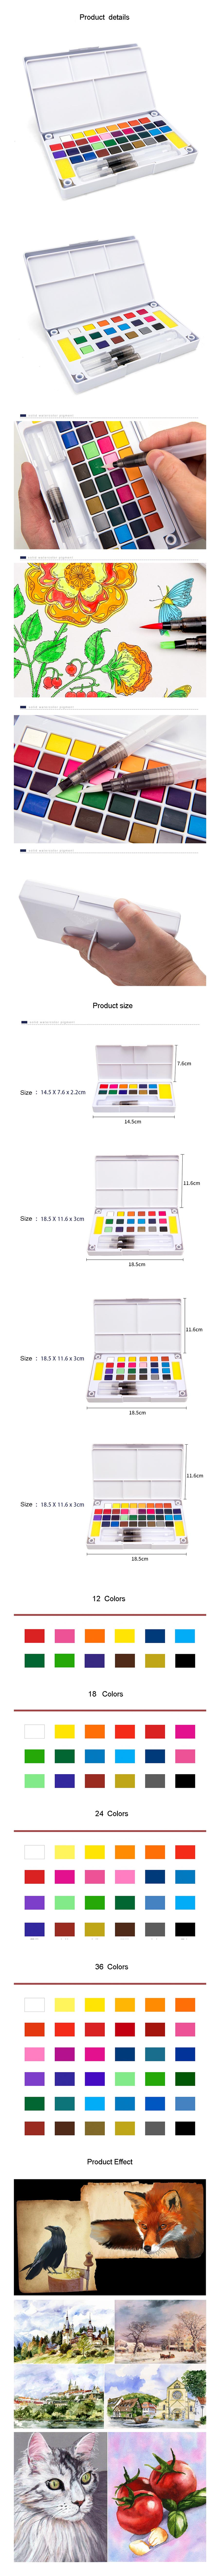 Portable-Solid-Watercolor-Paint-Set-For-Childrens-Sketch-In-Kindergarten-1475693-1